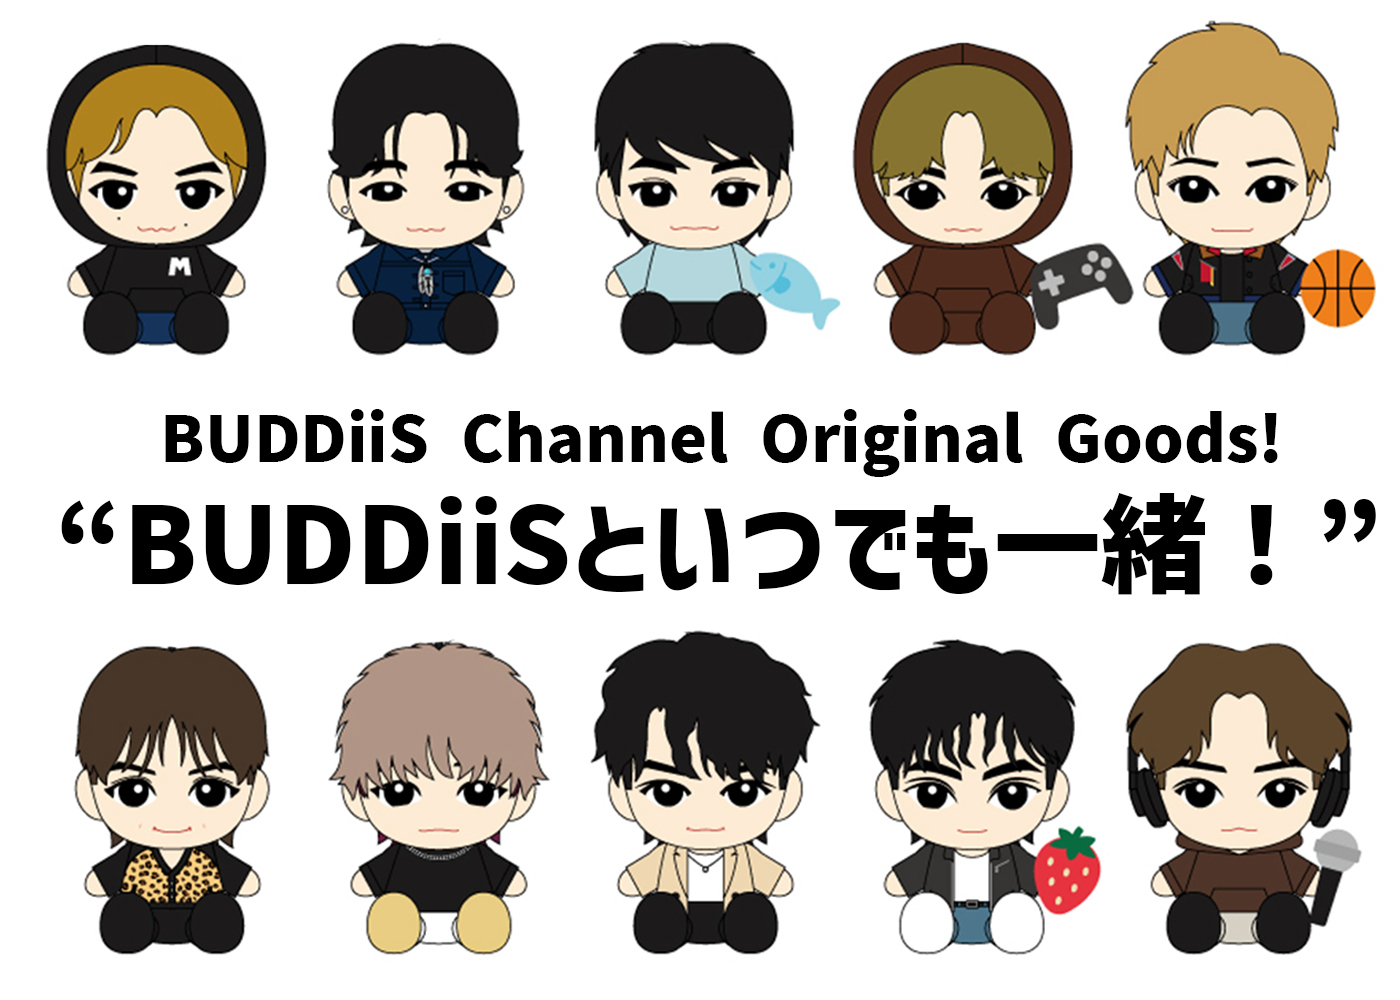 BUDDiiS公式YouTubeチャンネル”BUDDiiS Channel”オリジナルグッズ発売 